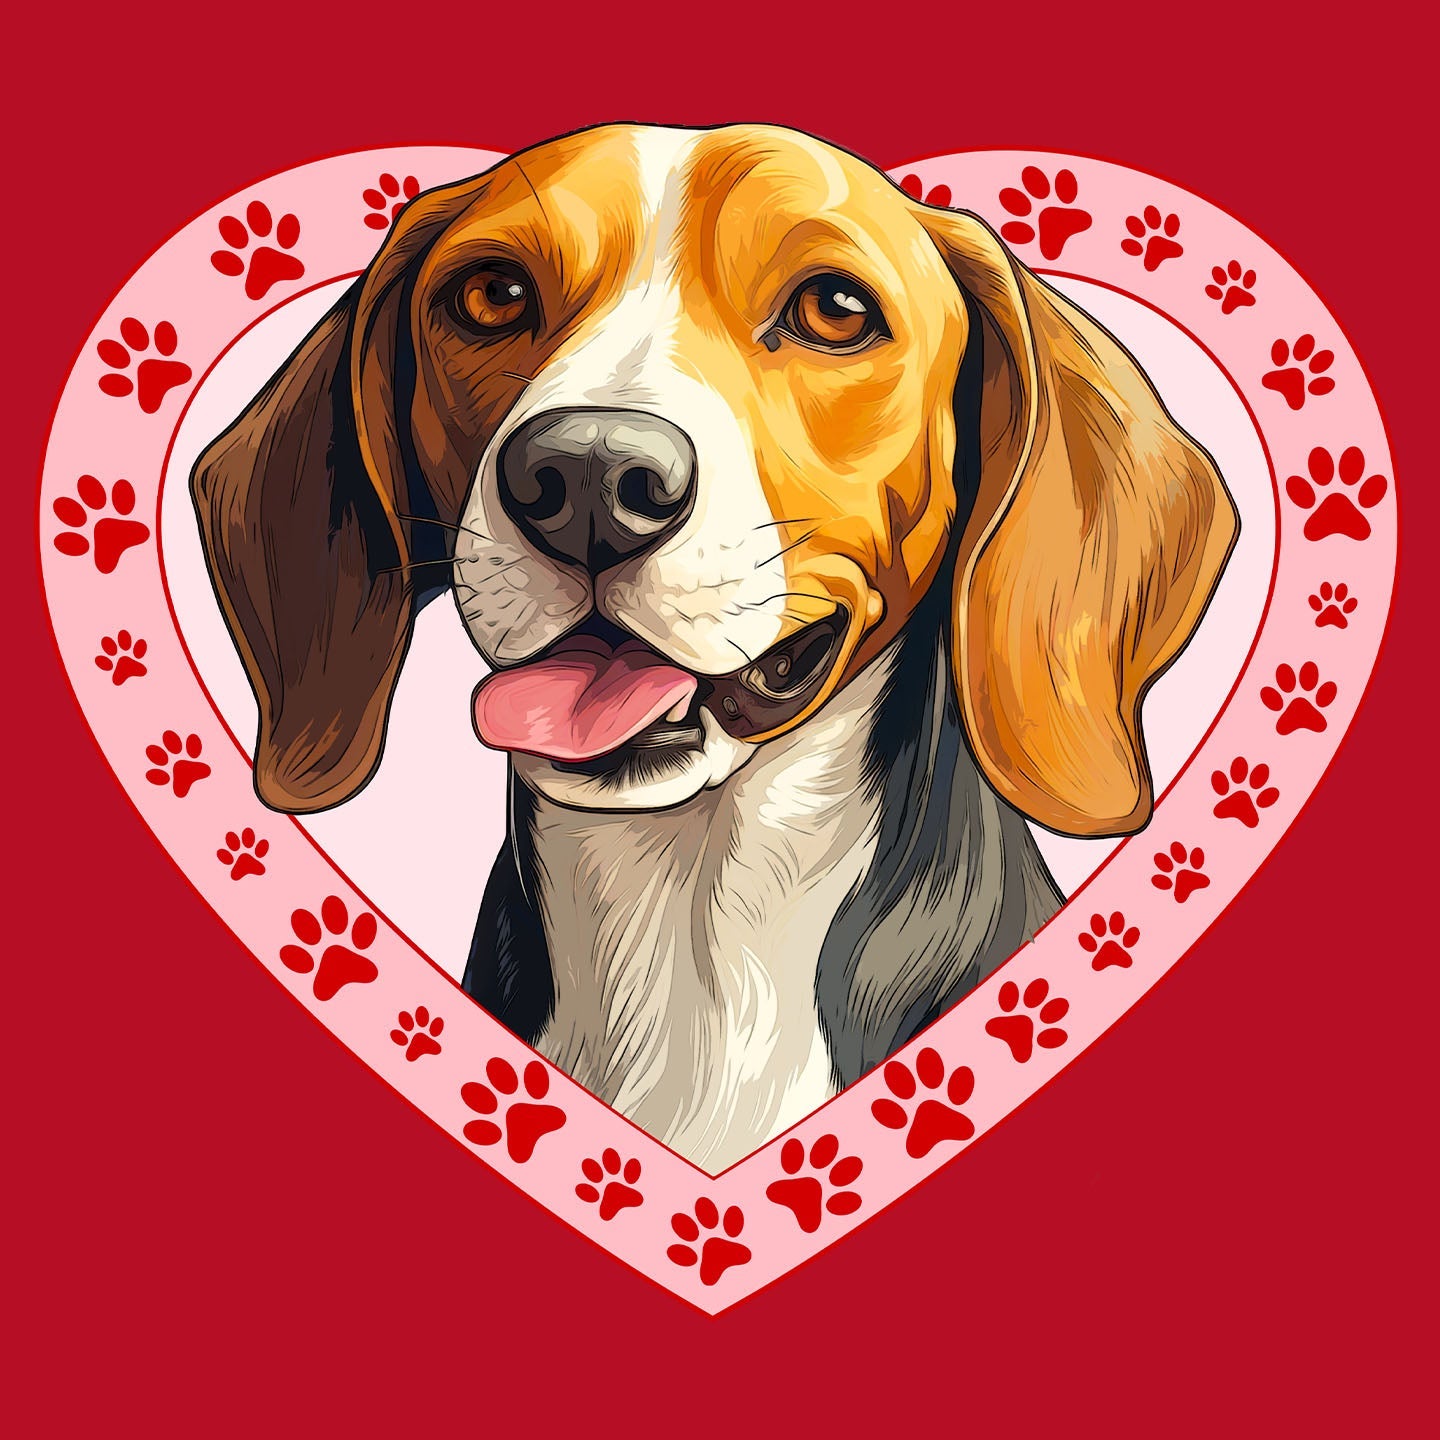 American Foxhound Illustration In Heart - Women's V-Neck T-Shirt